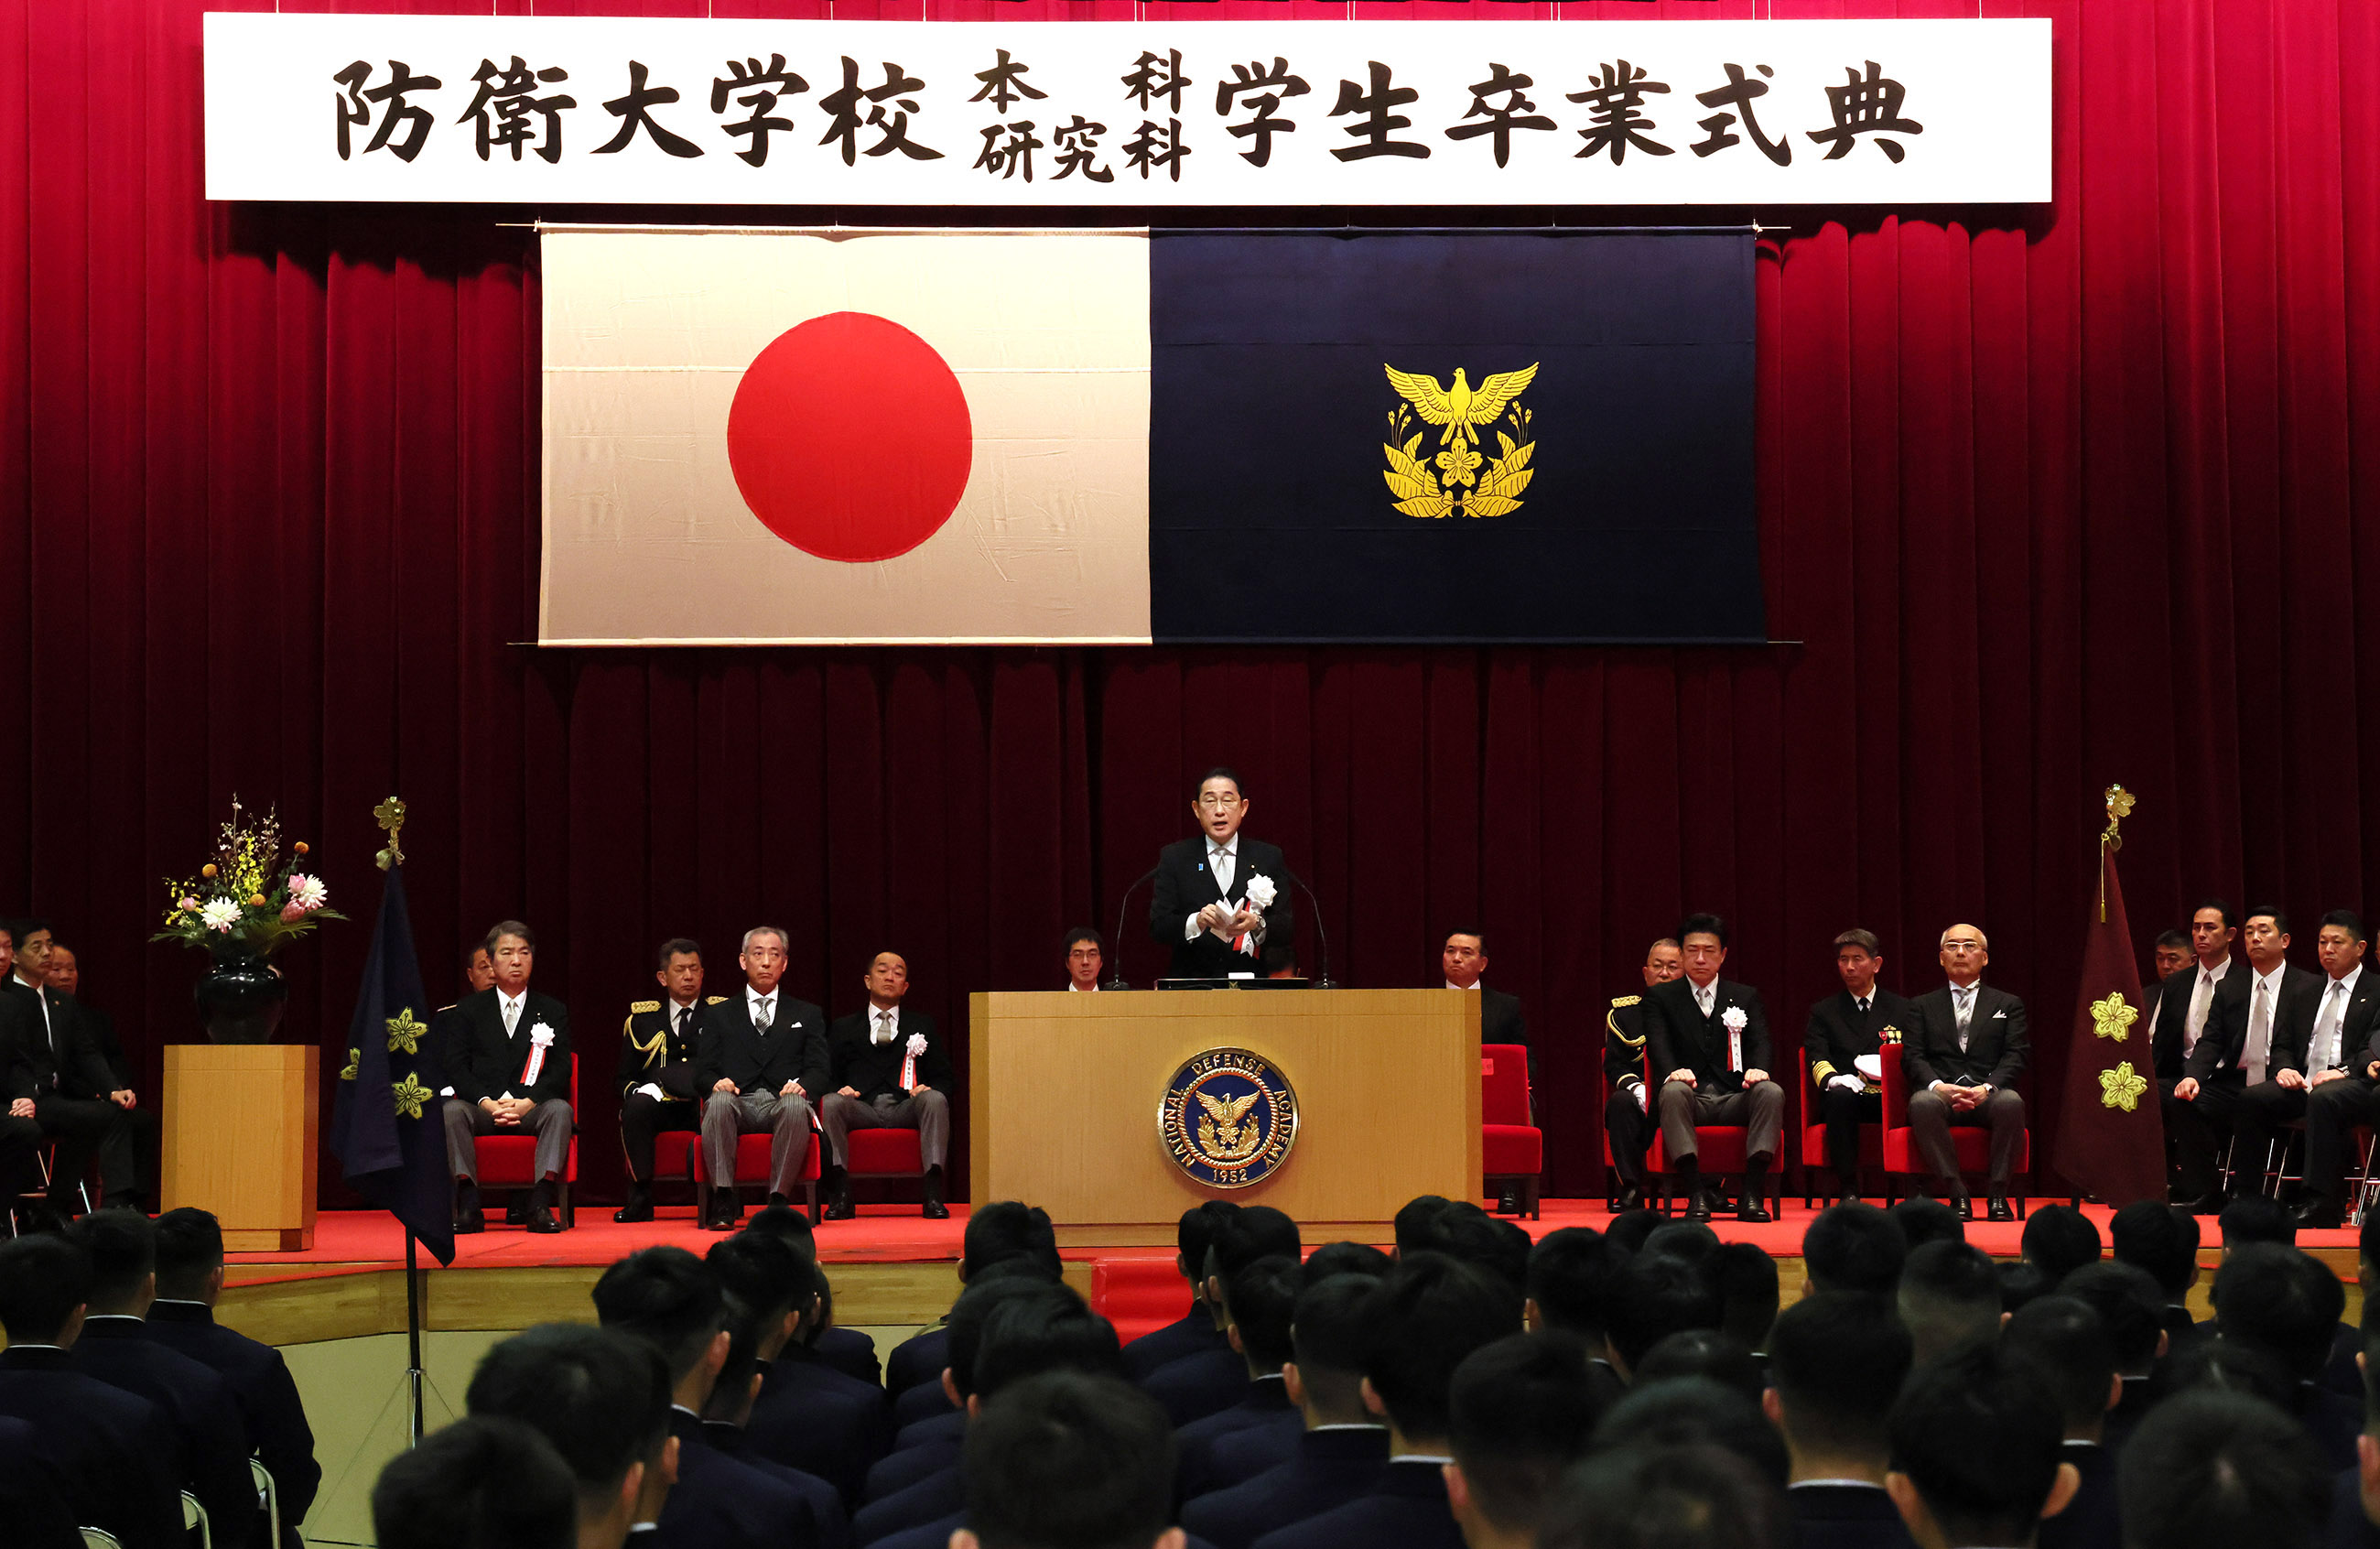 National Defense Academy Graduation Ceremony